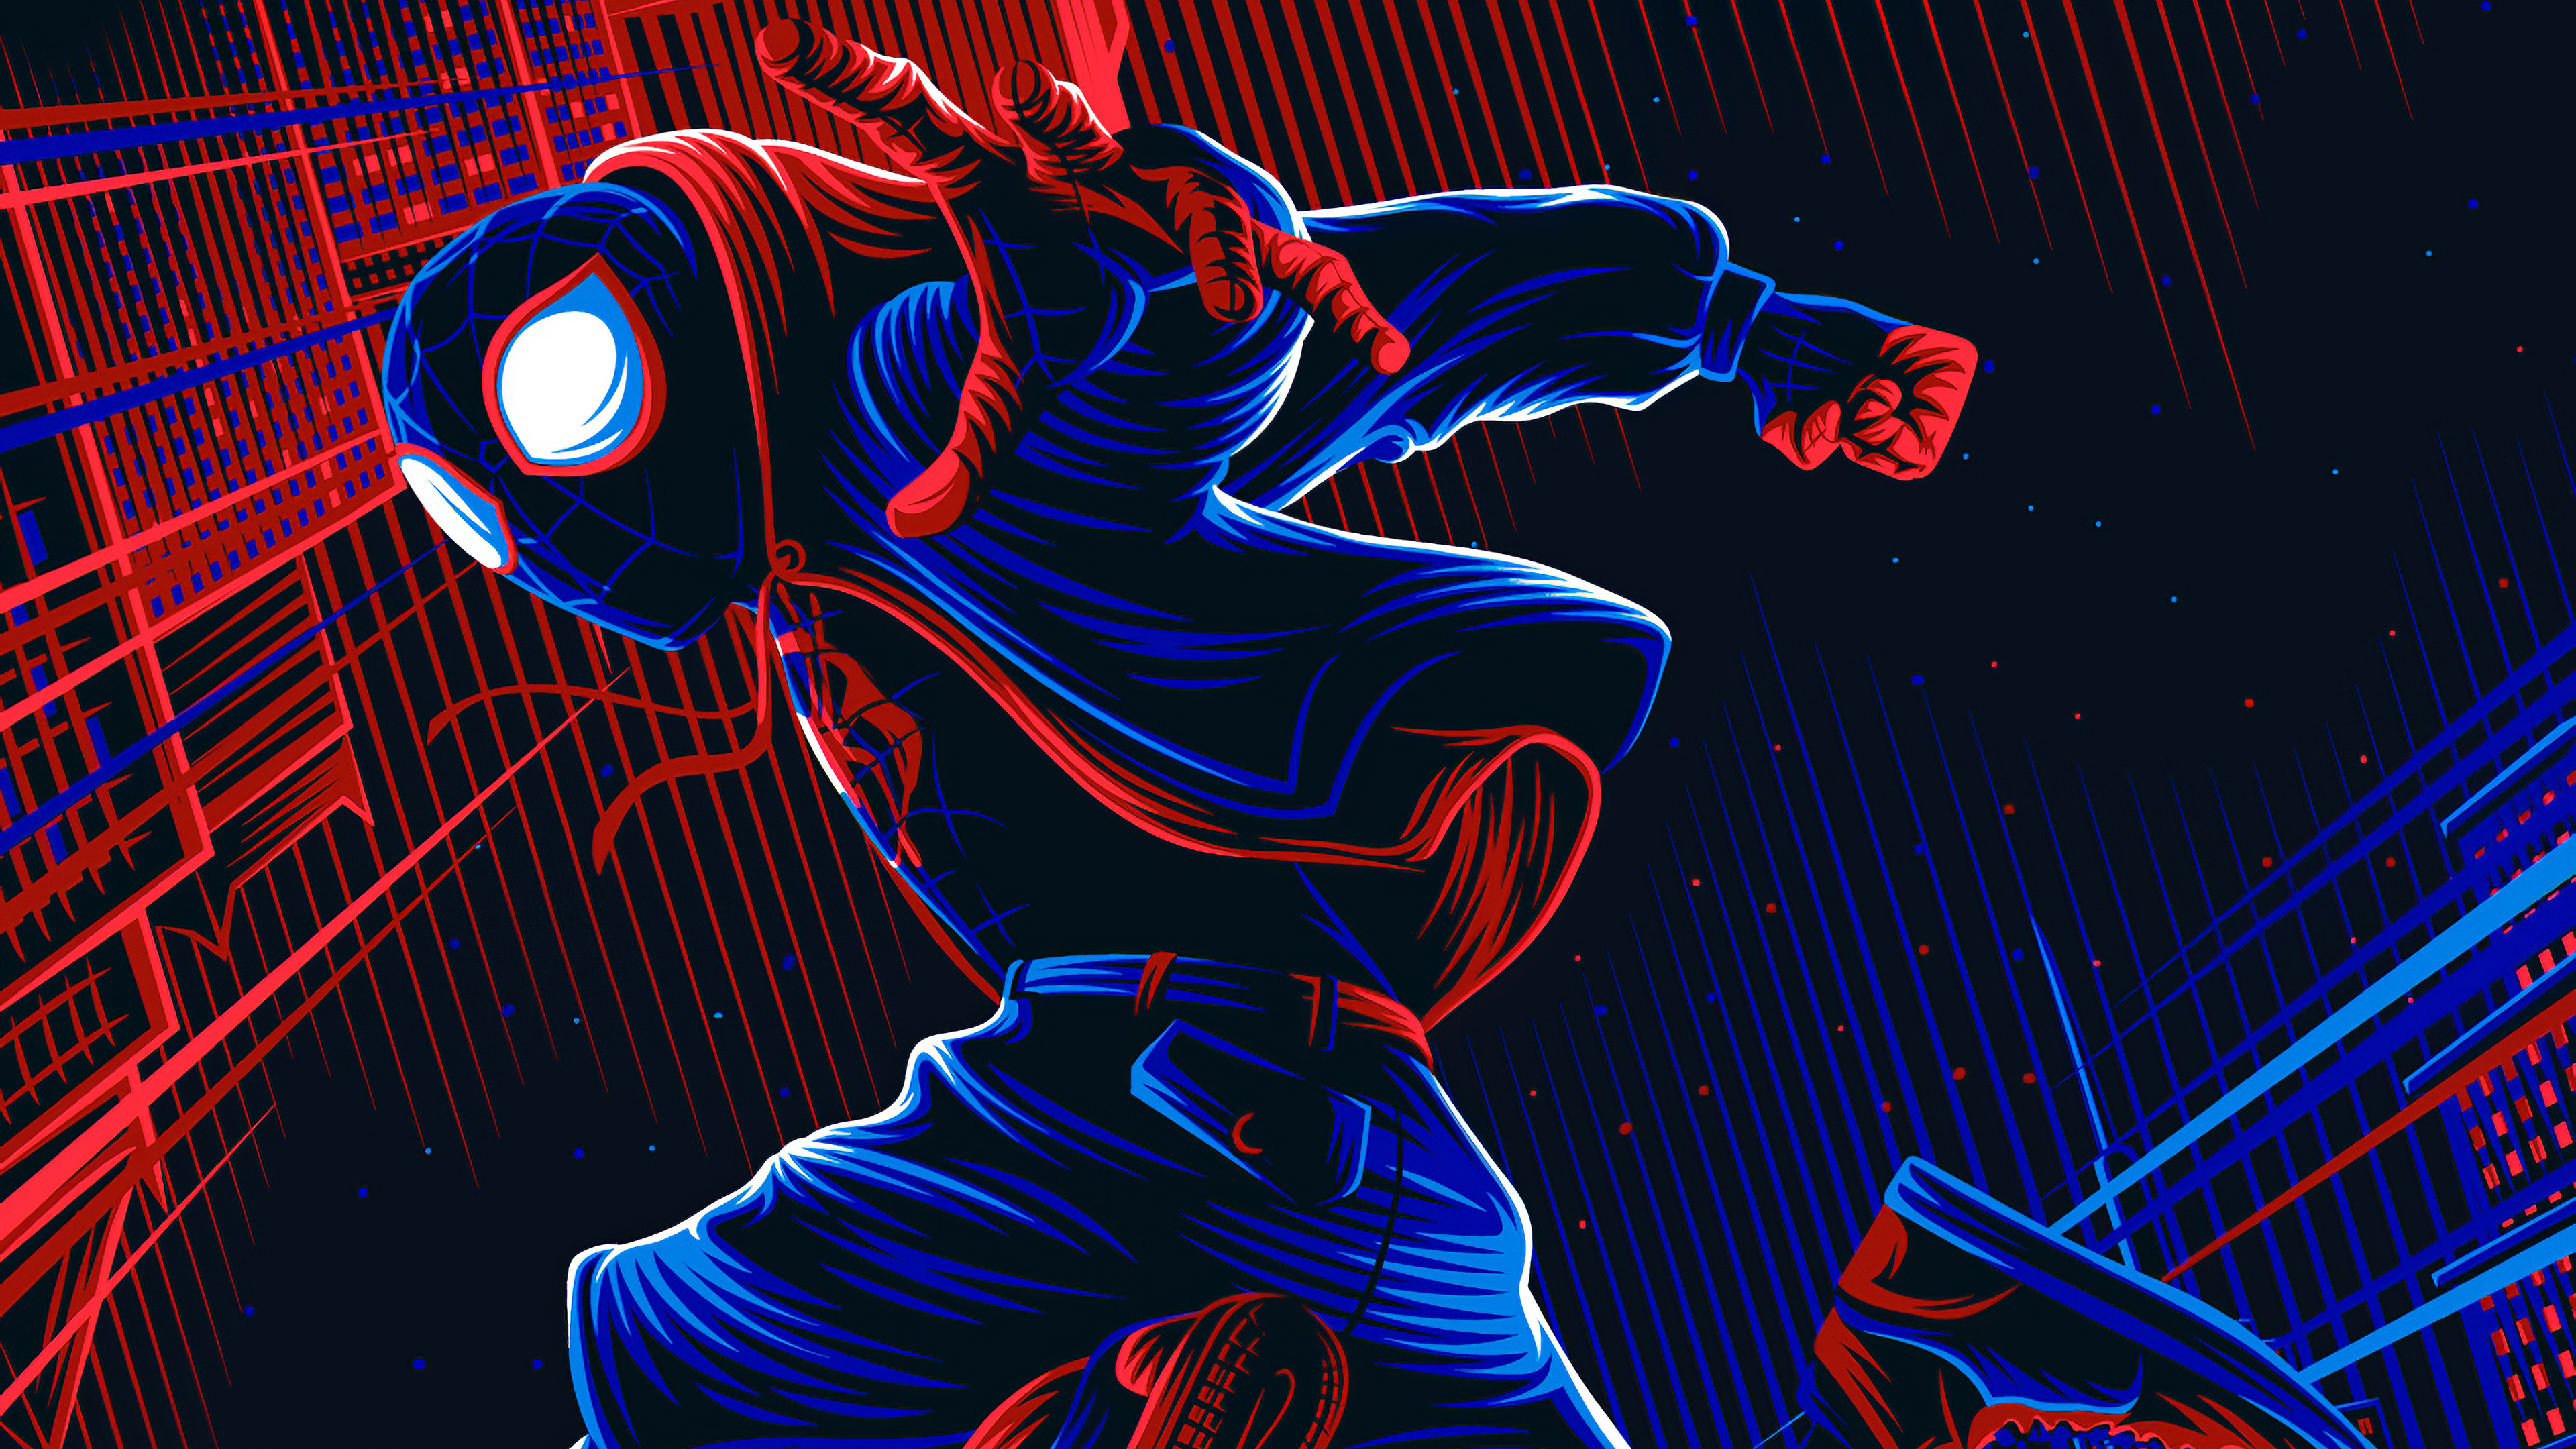 Spider-Man 4k Ultra HD Wallpaper | Background Image ...